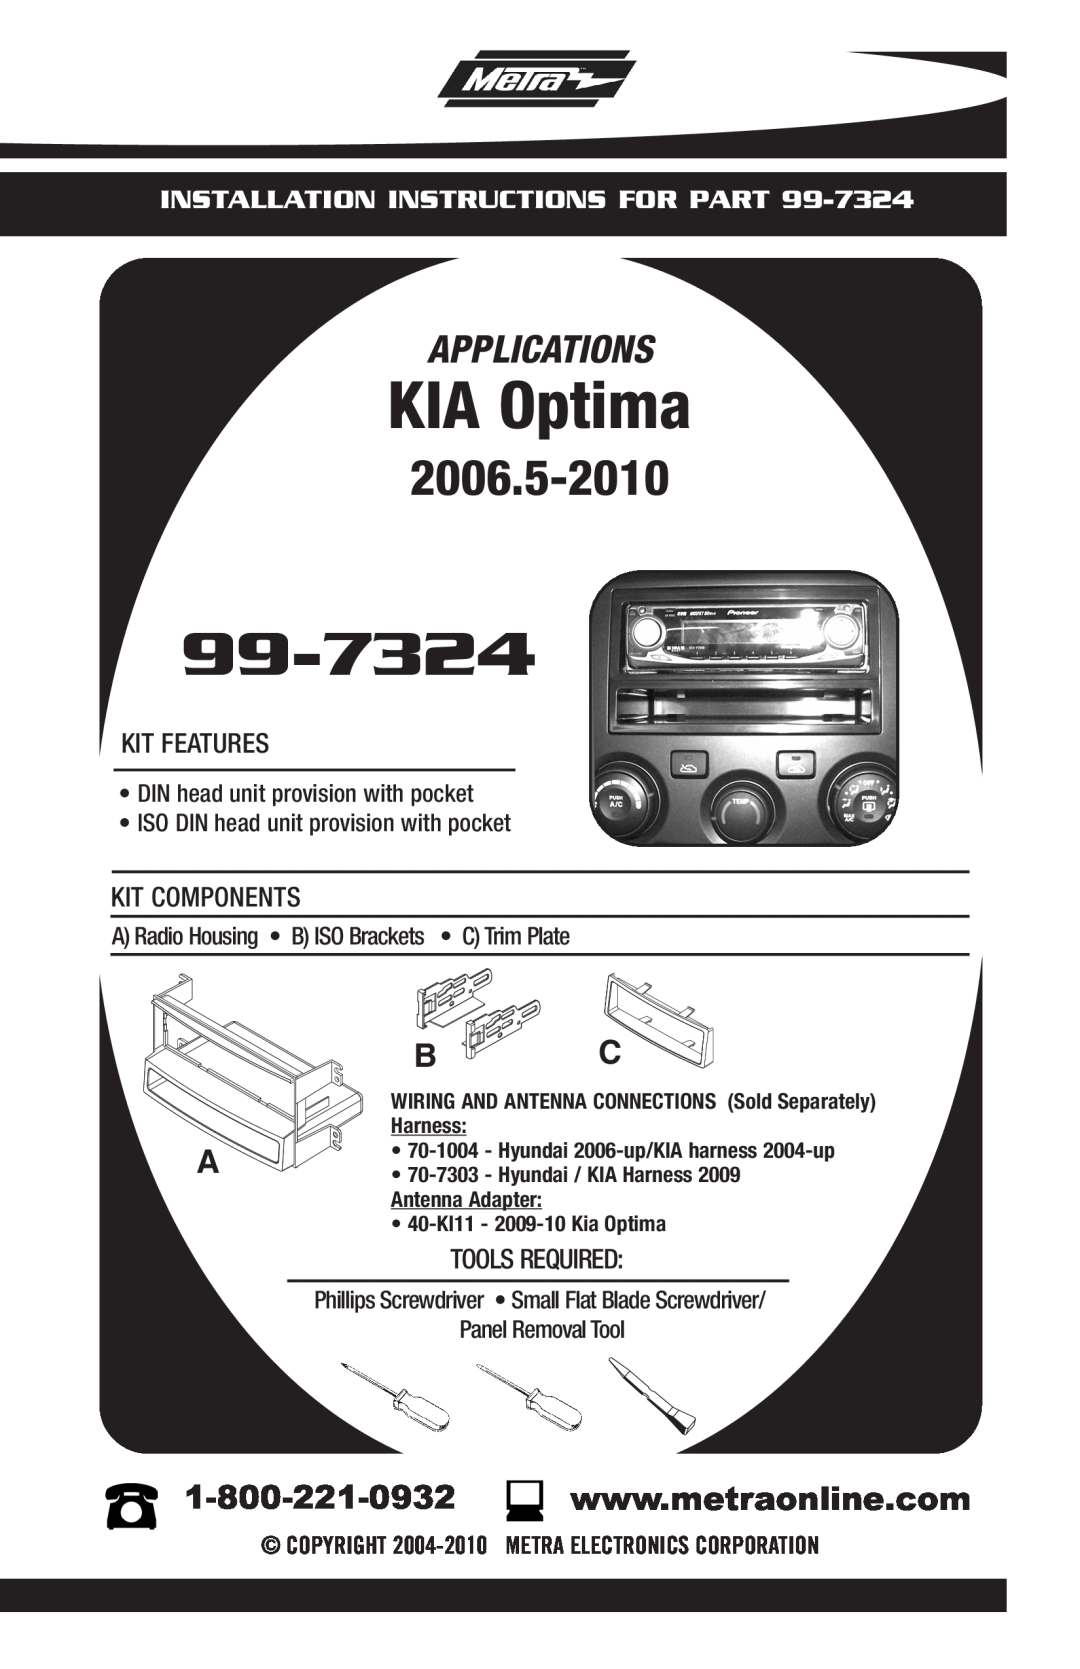 Metra Electronics 99-7324 installation instructions KIA Optima, 2006.5-2010, Applications, Panel Removal Tool 